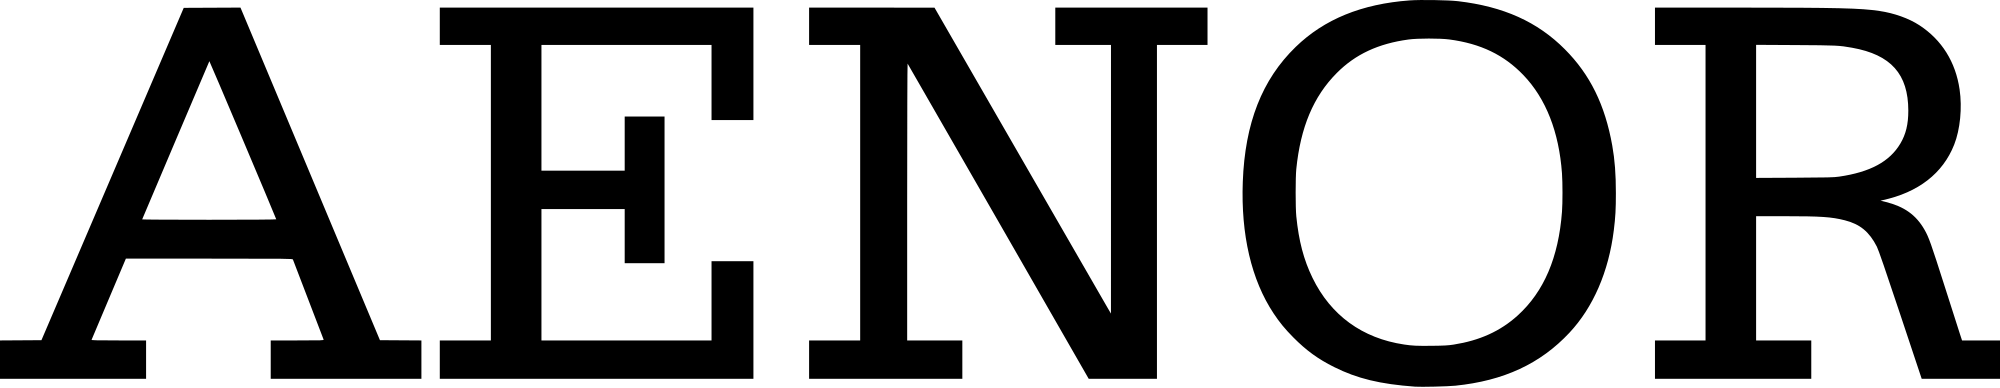 Logo Aenor Black PNG-PlusPNG.